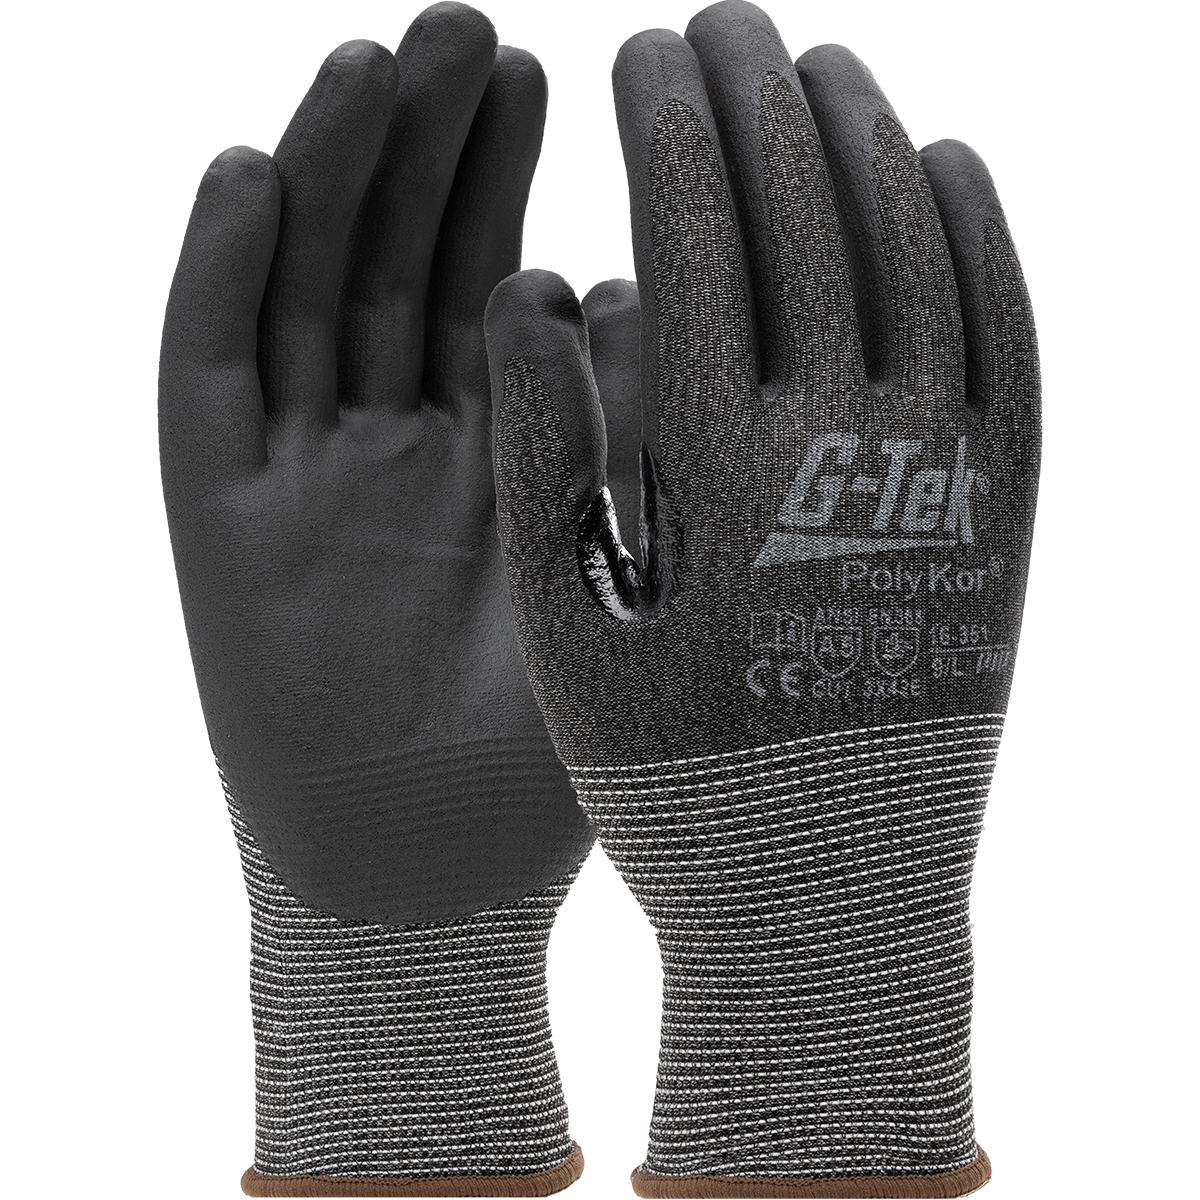 G-TEK POLYKOR 16-351 FOAM NITRILE PALM - Cut Resistant Gloves